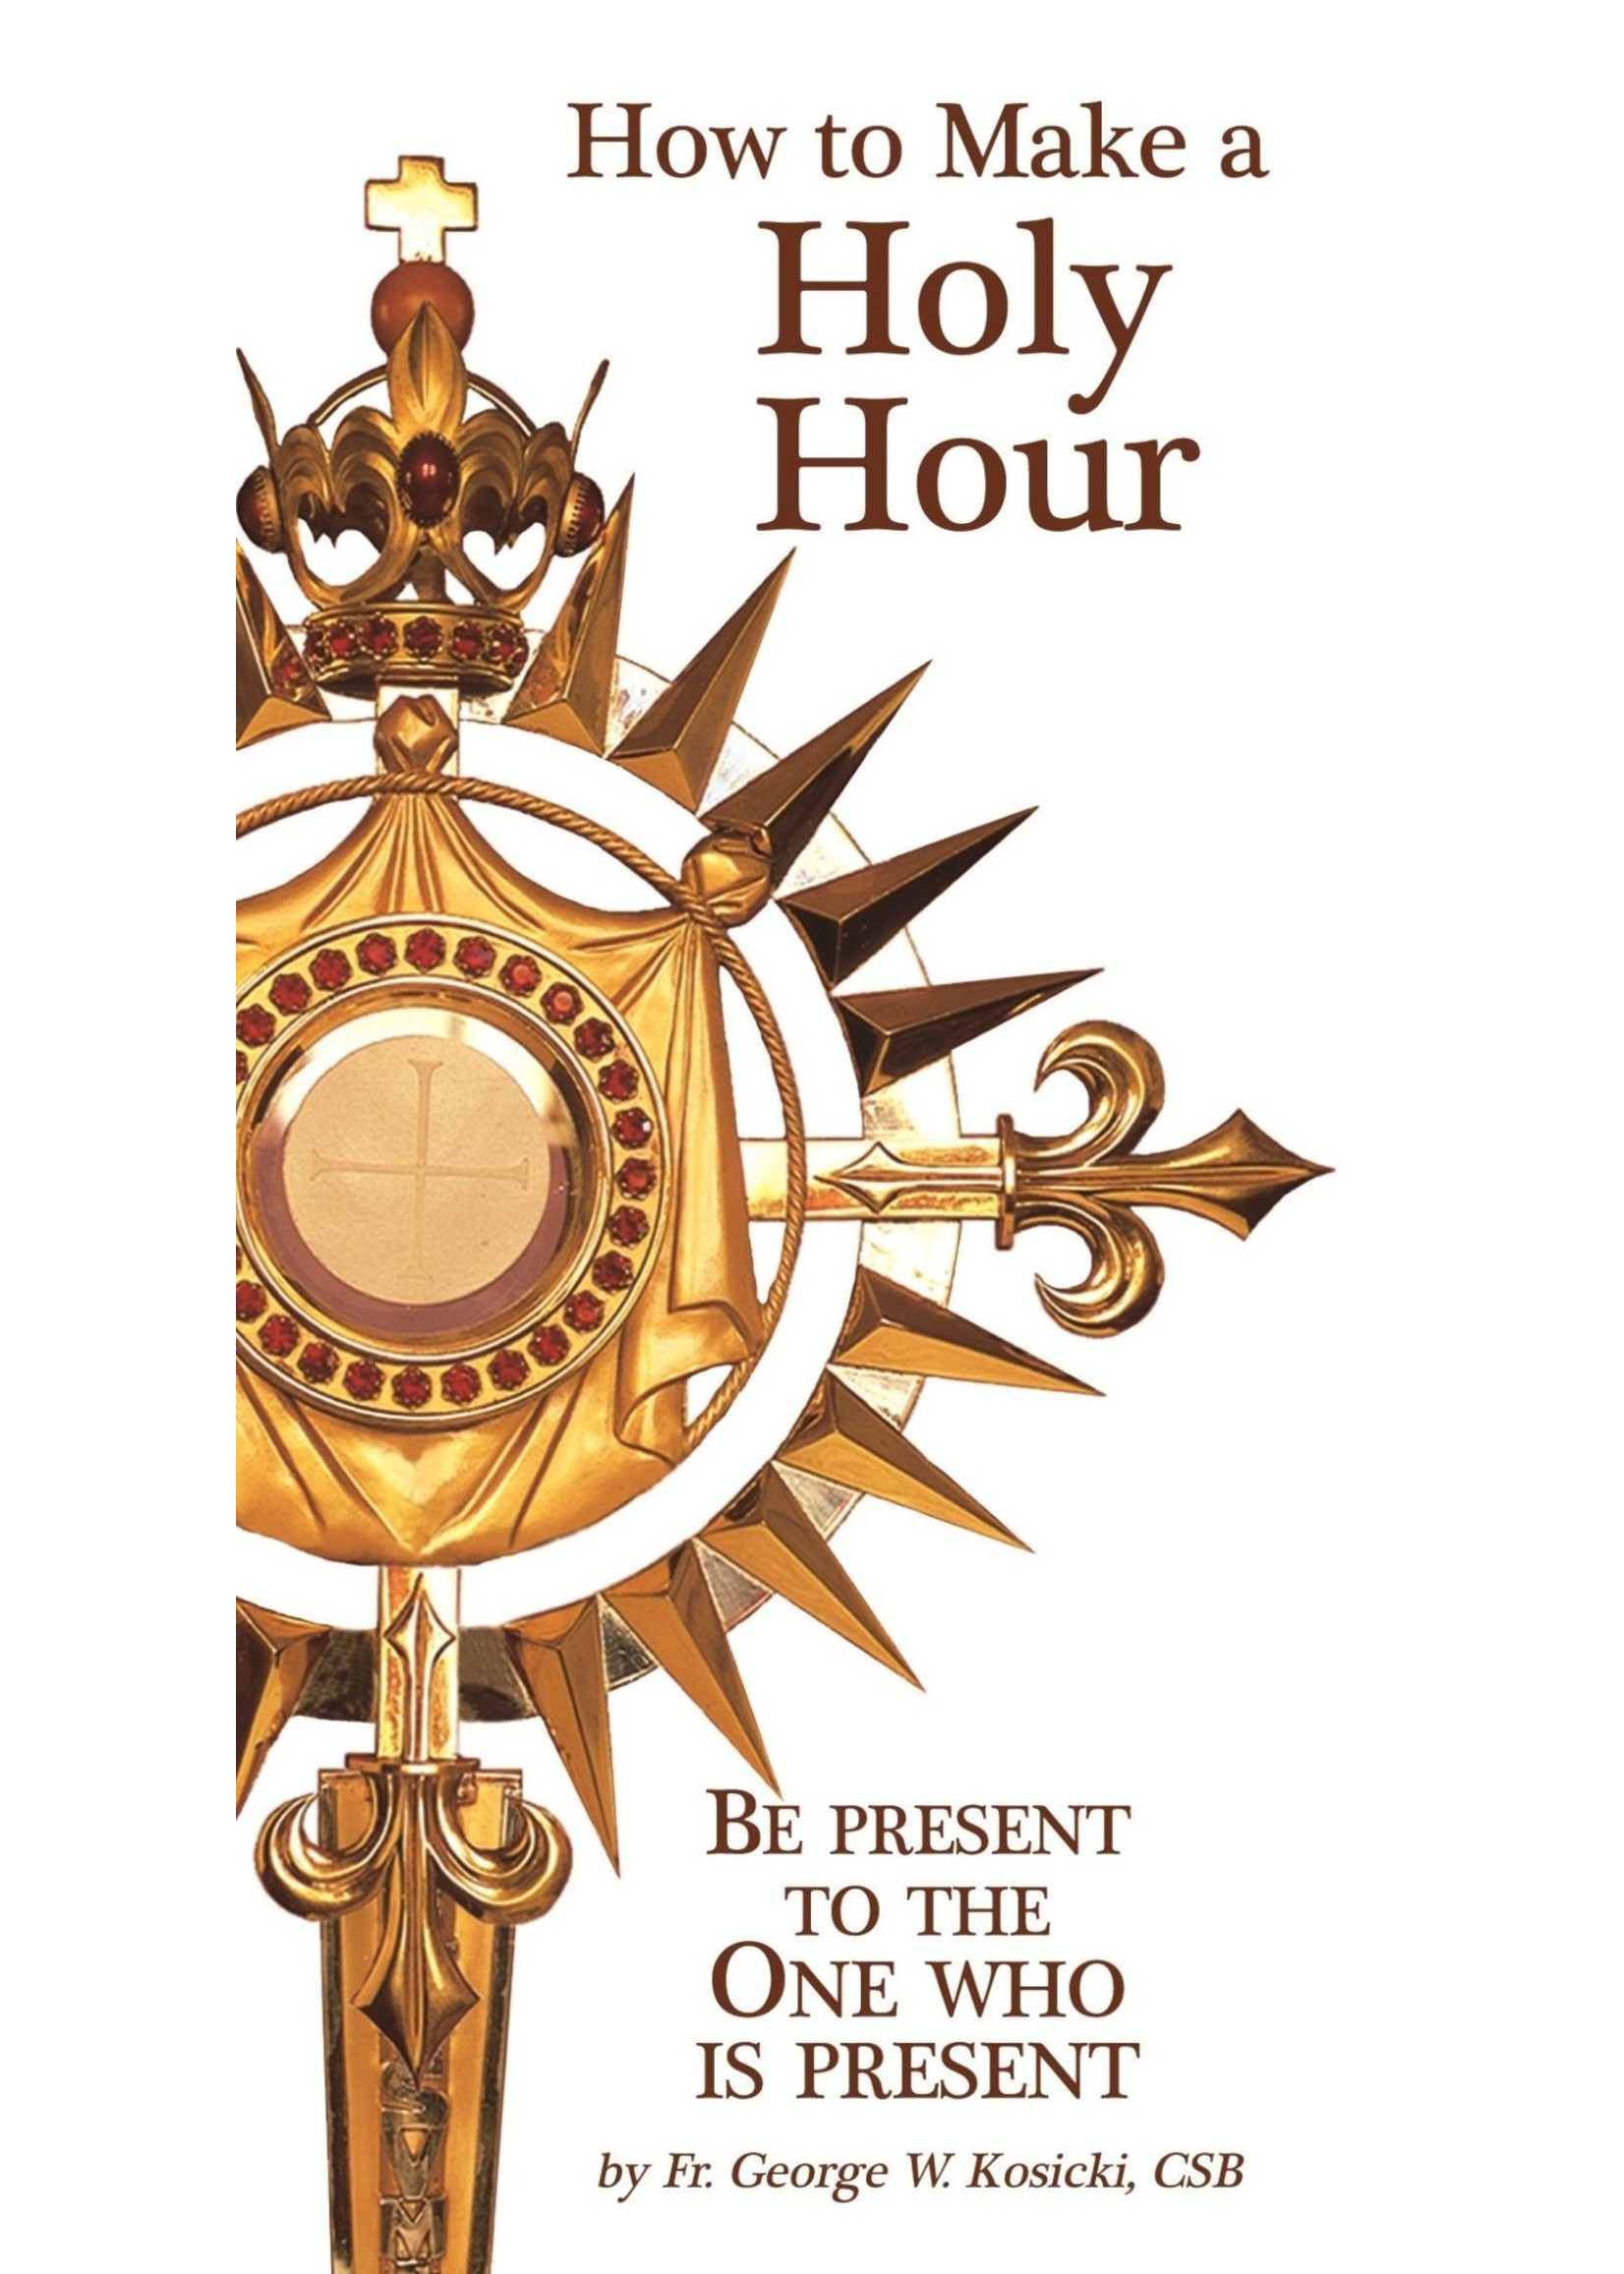 How to Make a Holy Hour